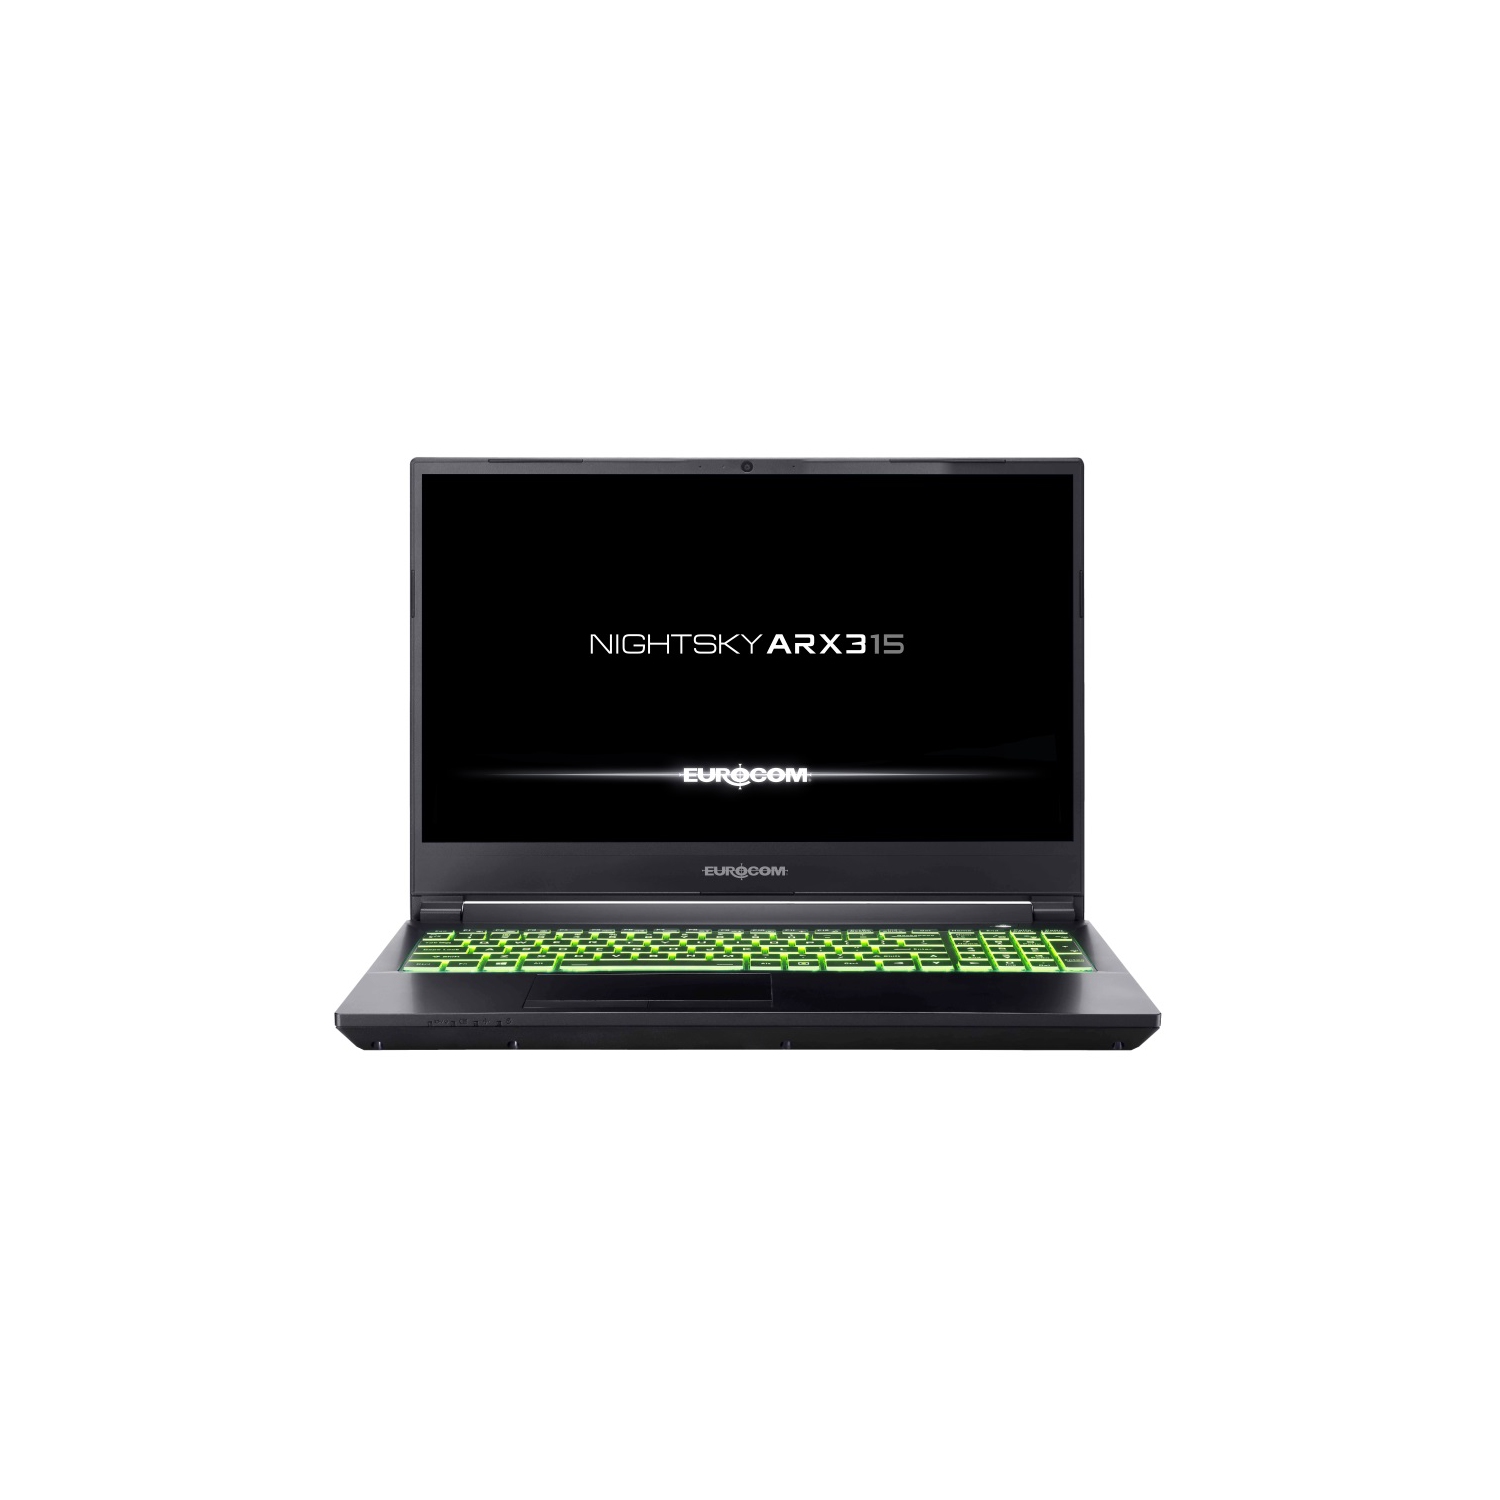 Eurocom Nightsky ARX315 Laptop Computer-AMD Ryzen 9 5900x/NVidia RTX 3070/1TB M.2/32GB RAM/Windows 10